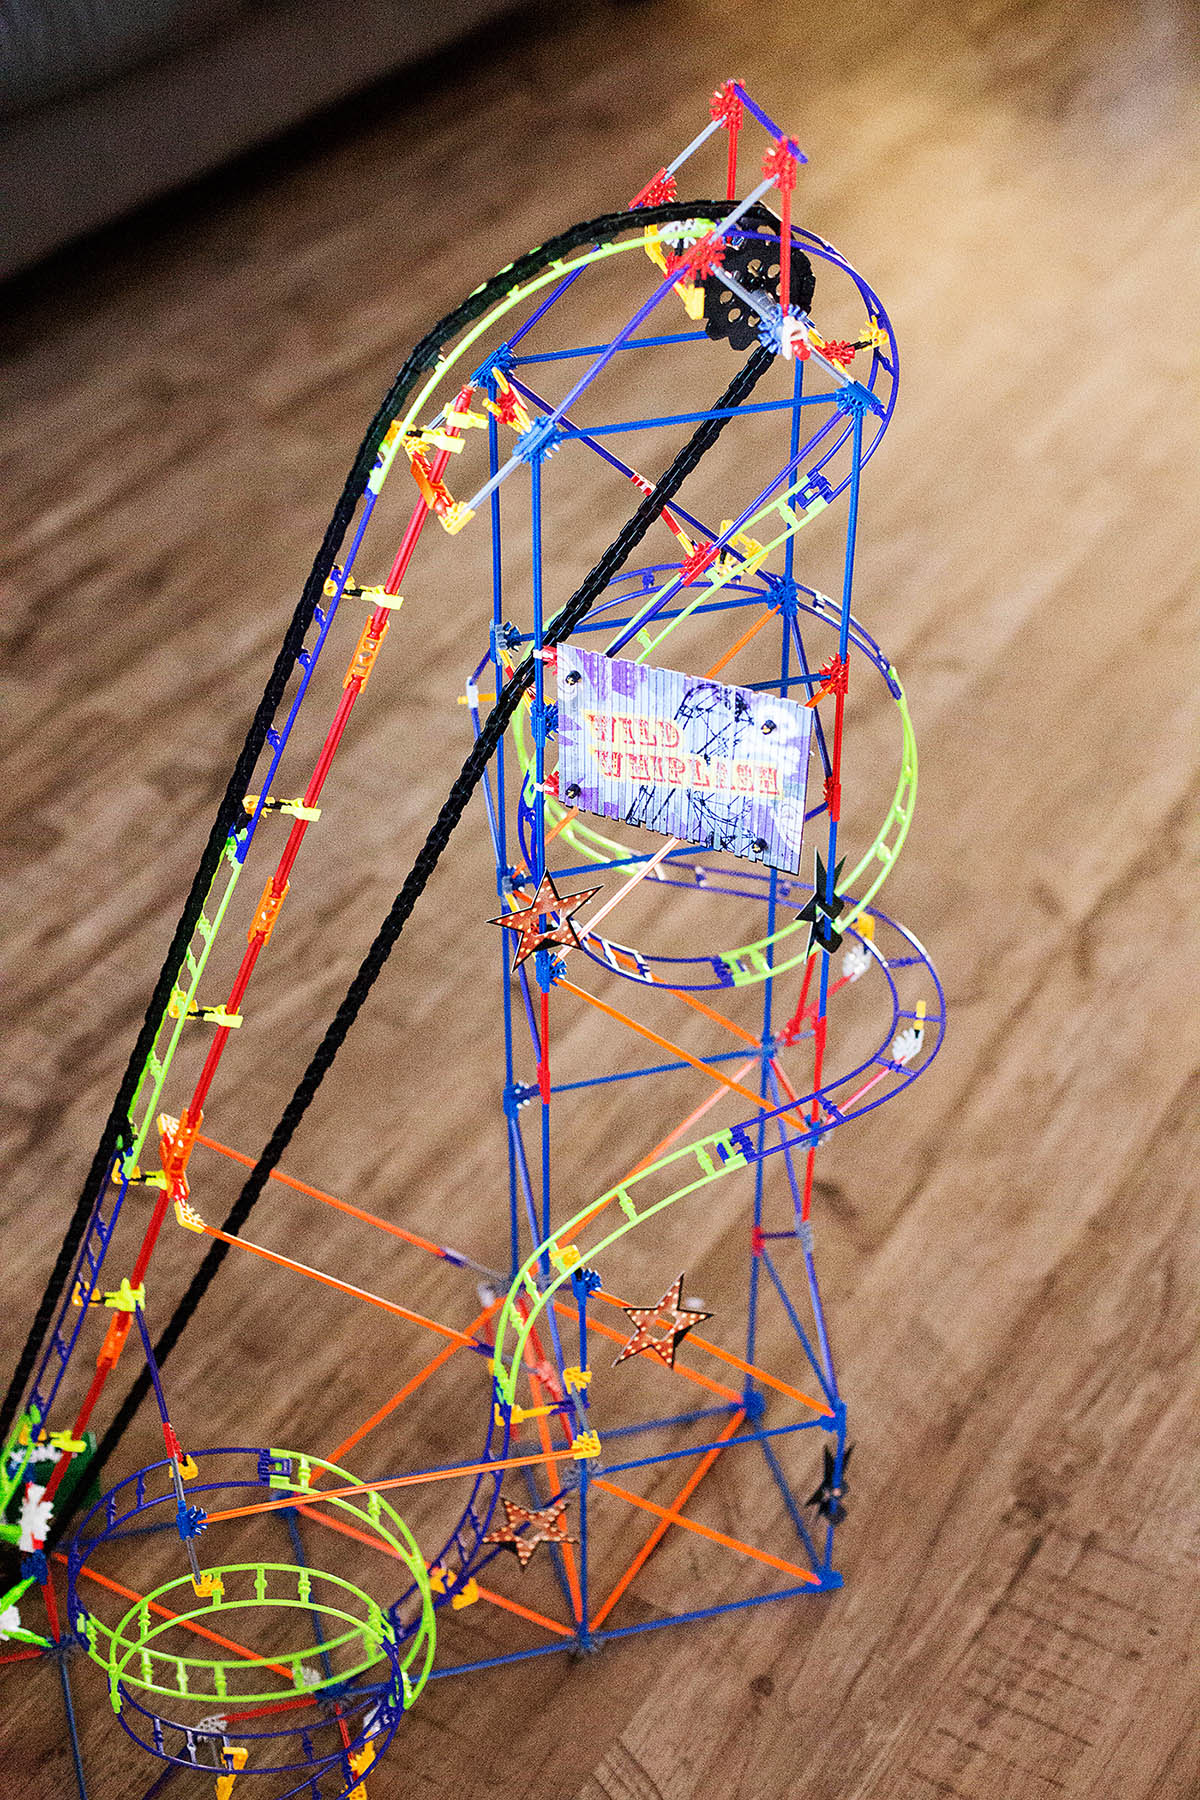 K'NEX Wild Whiplash roller coaster with working motor - great inexpensive gift idea!